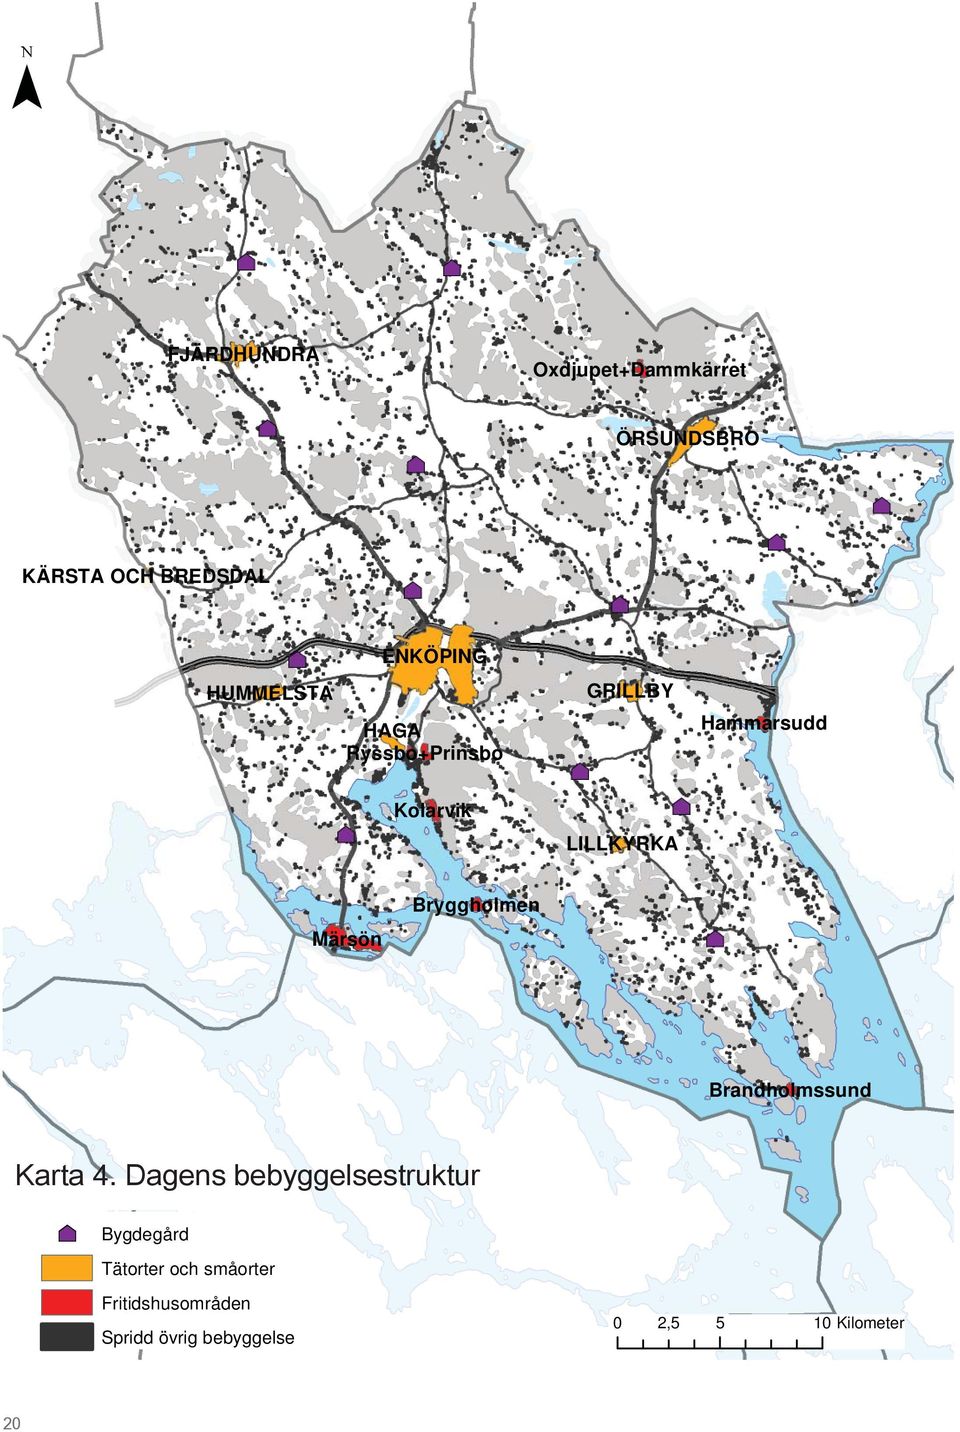 Bryggholmen Brandholmssund Karta 4.